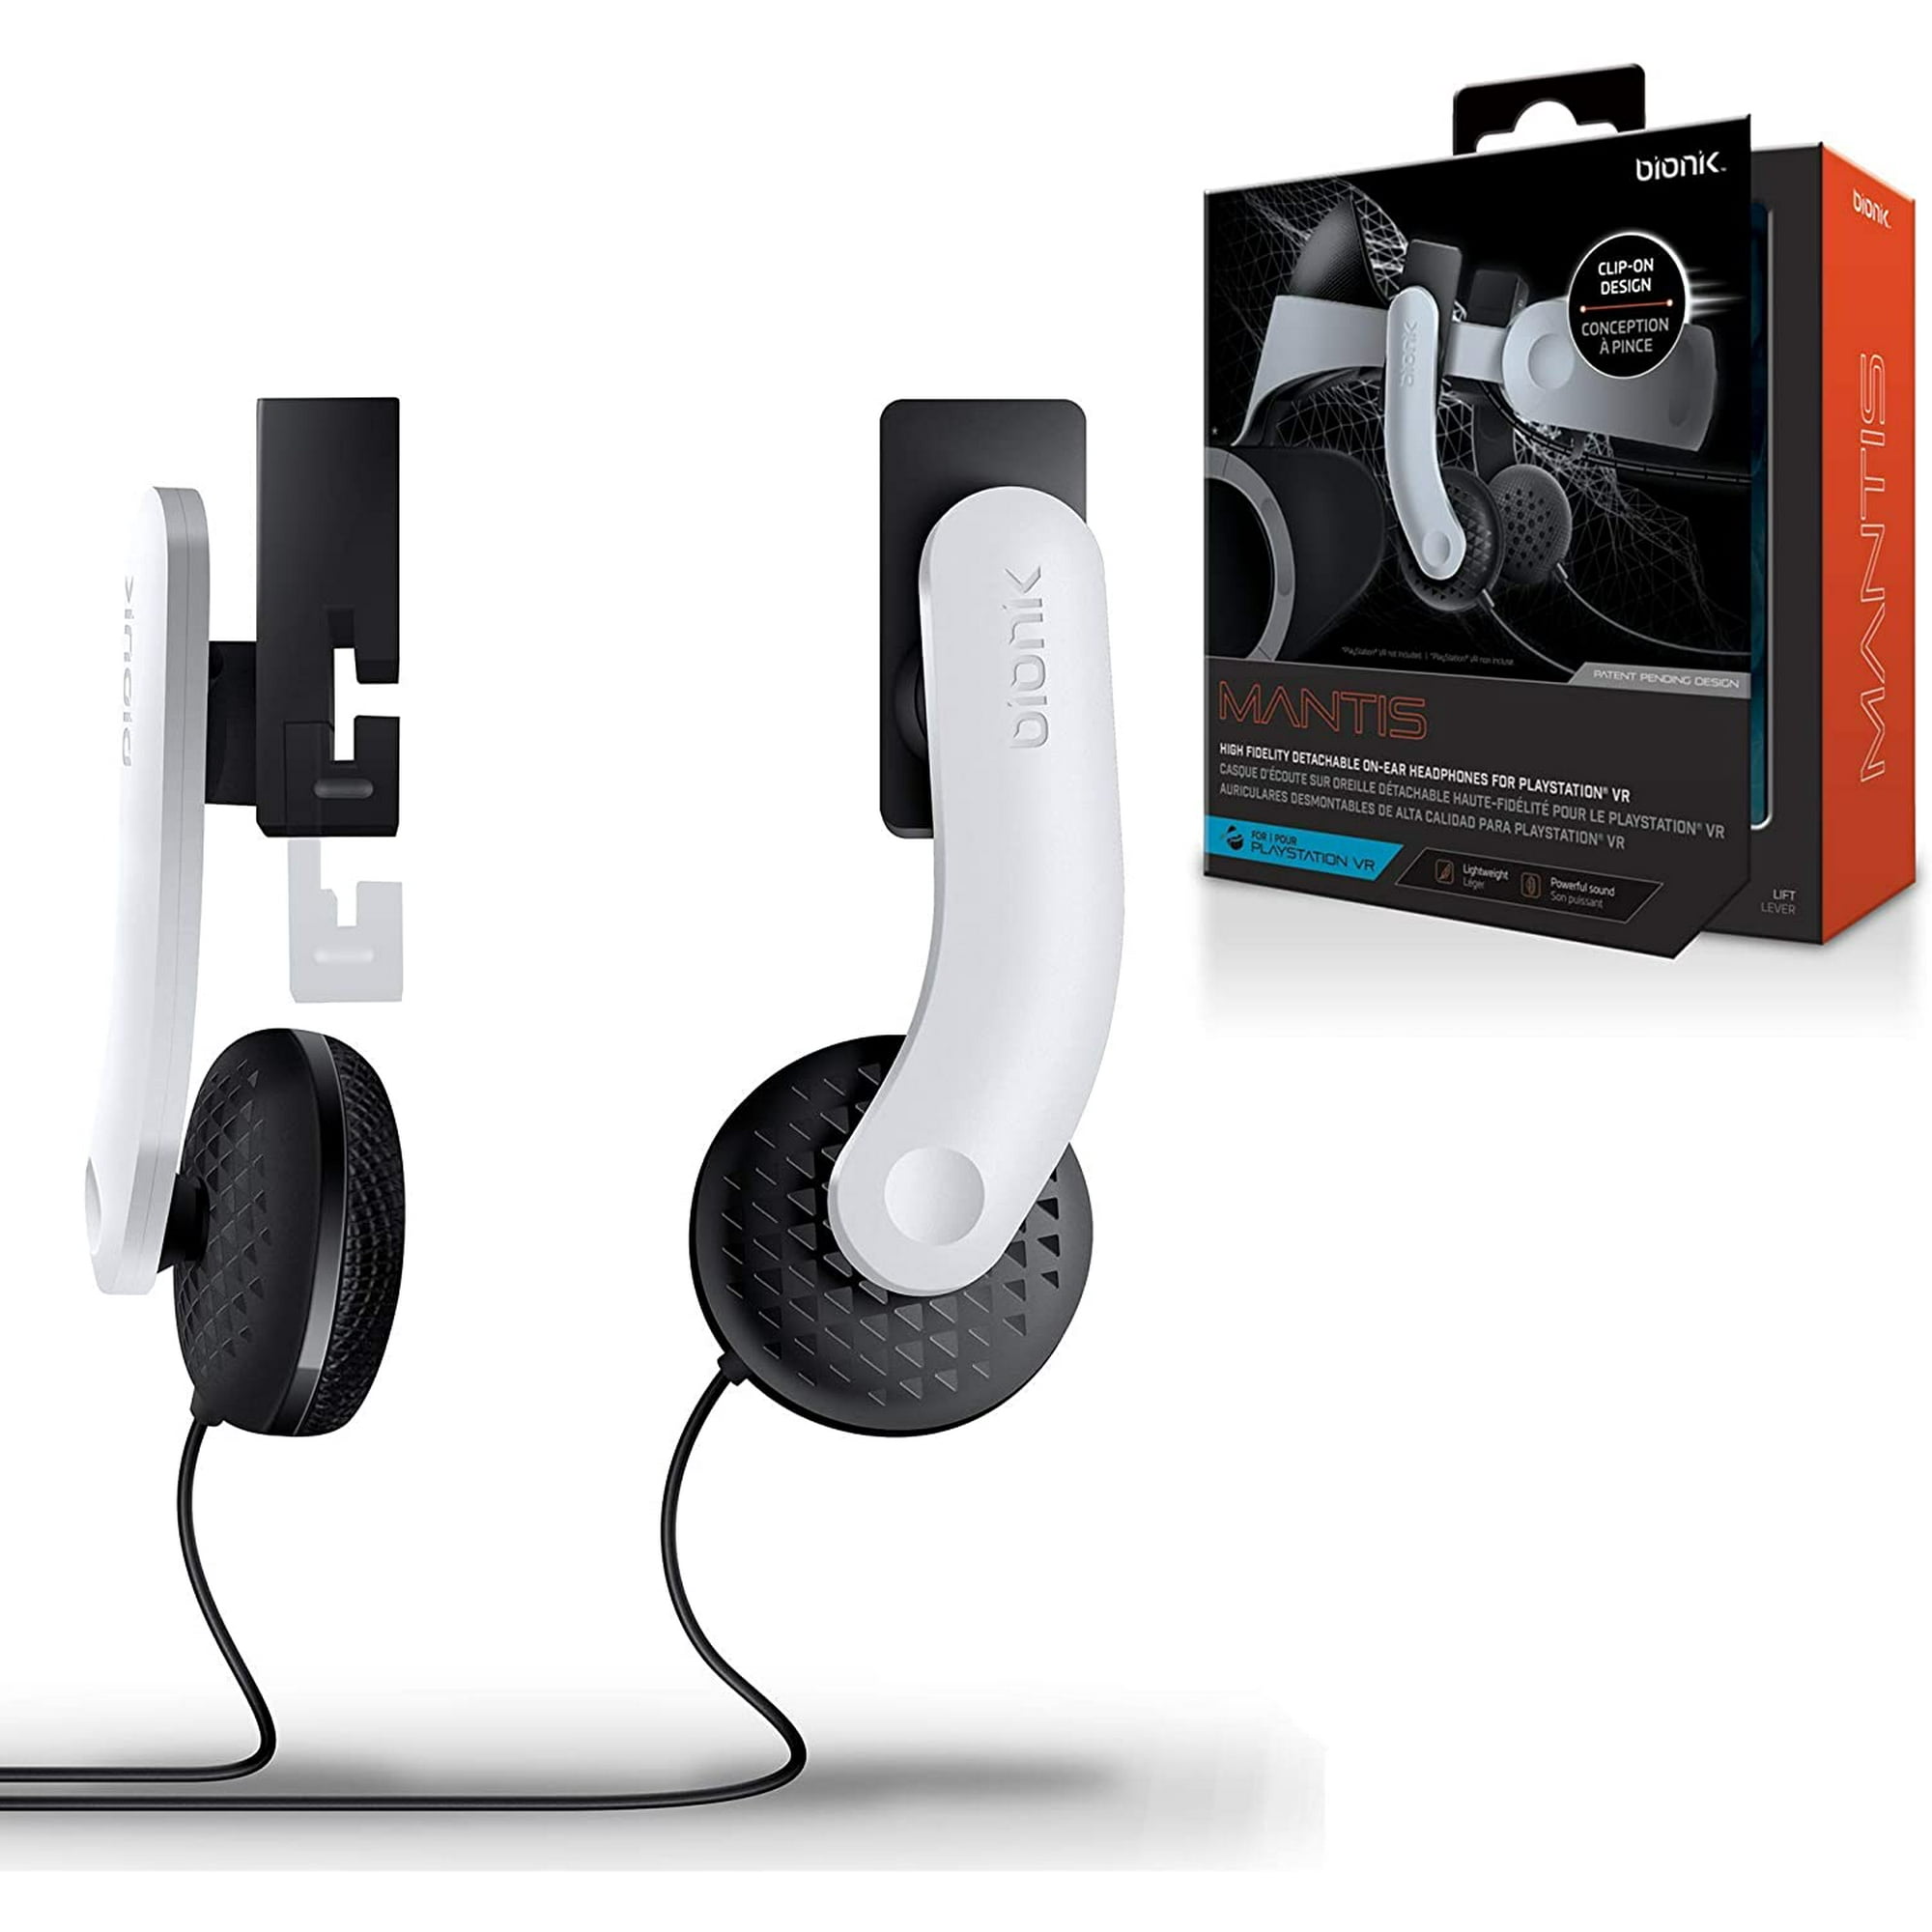 besked Rytmisk temperament Bionik Mantis Headphone for Playstation VR | Walmart Canada